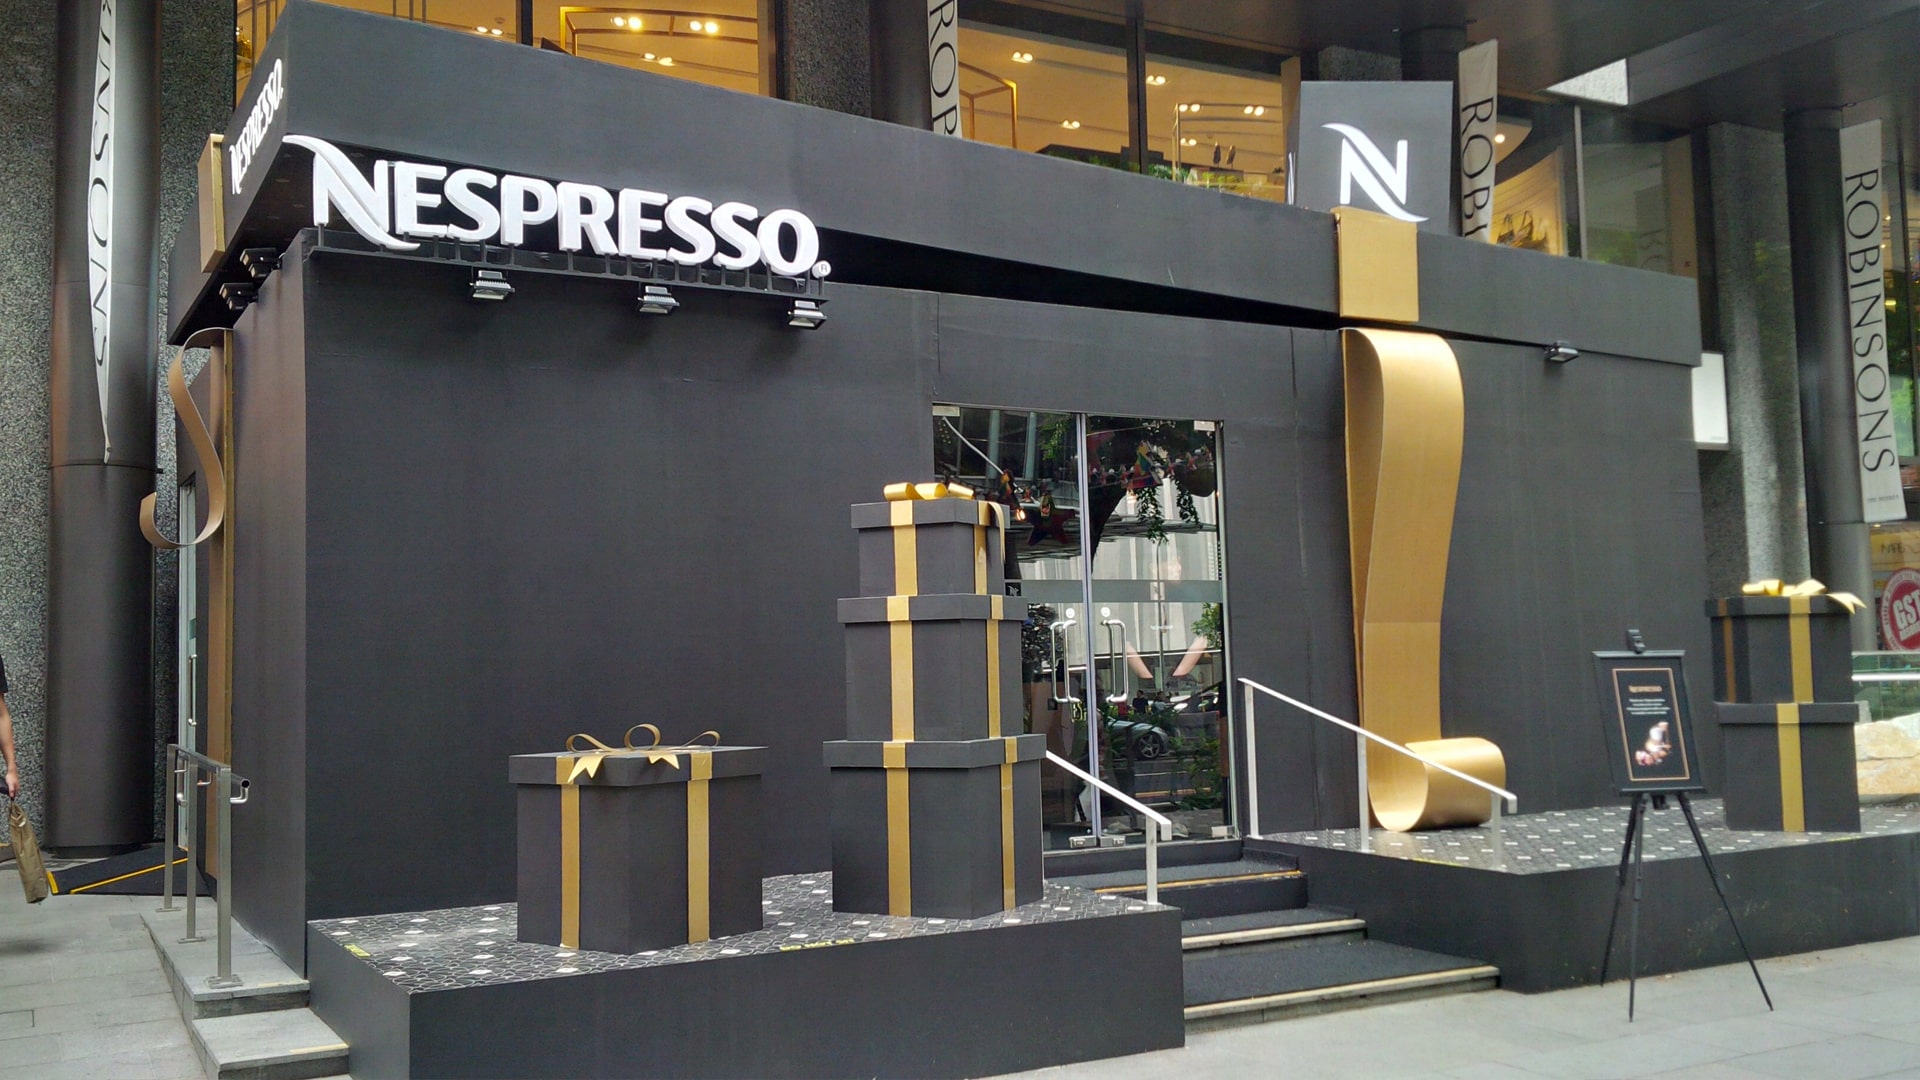 tsc_tubelar_exhibits_pop-up-stores_nespresso-01_1920x1080-min